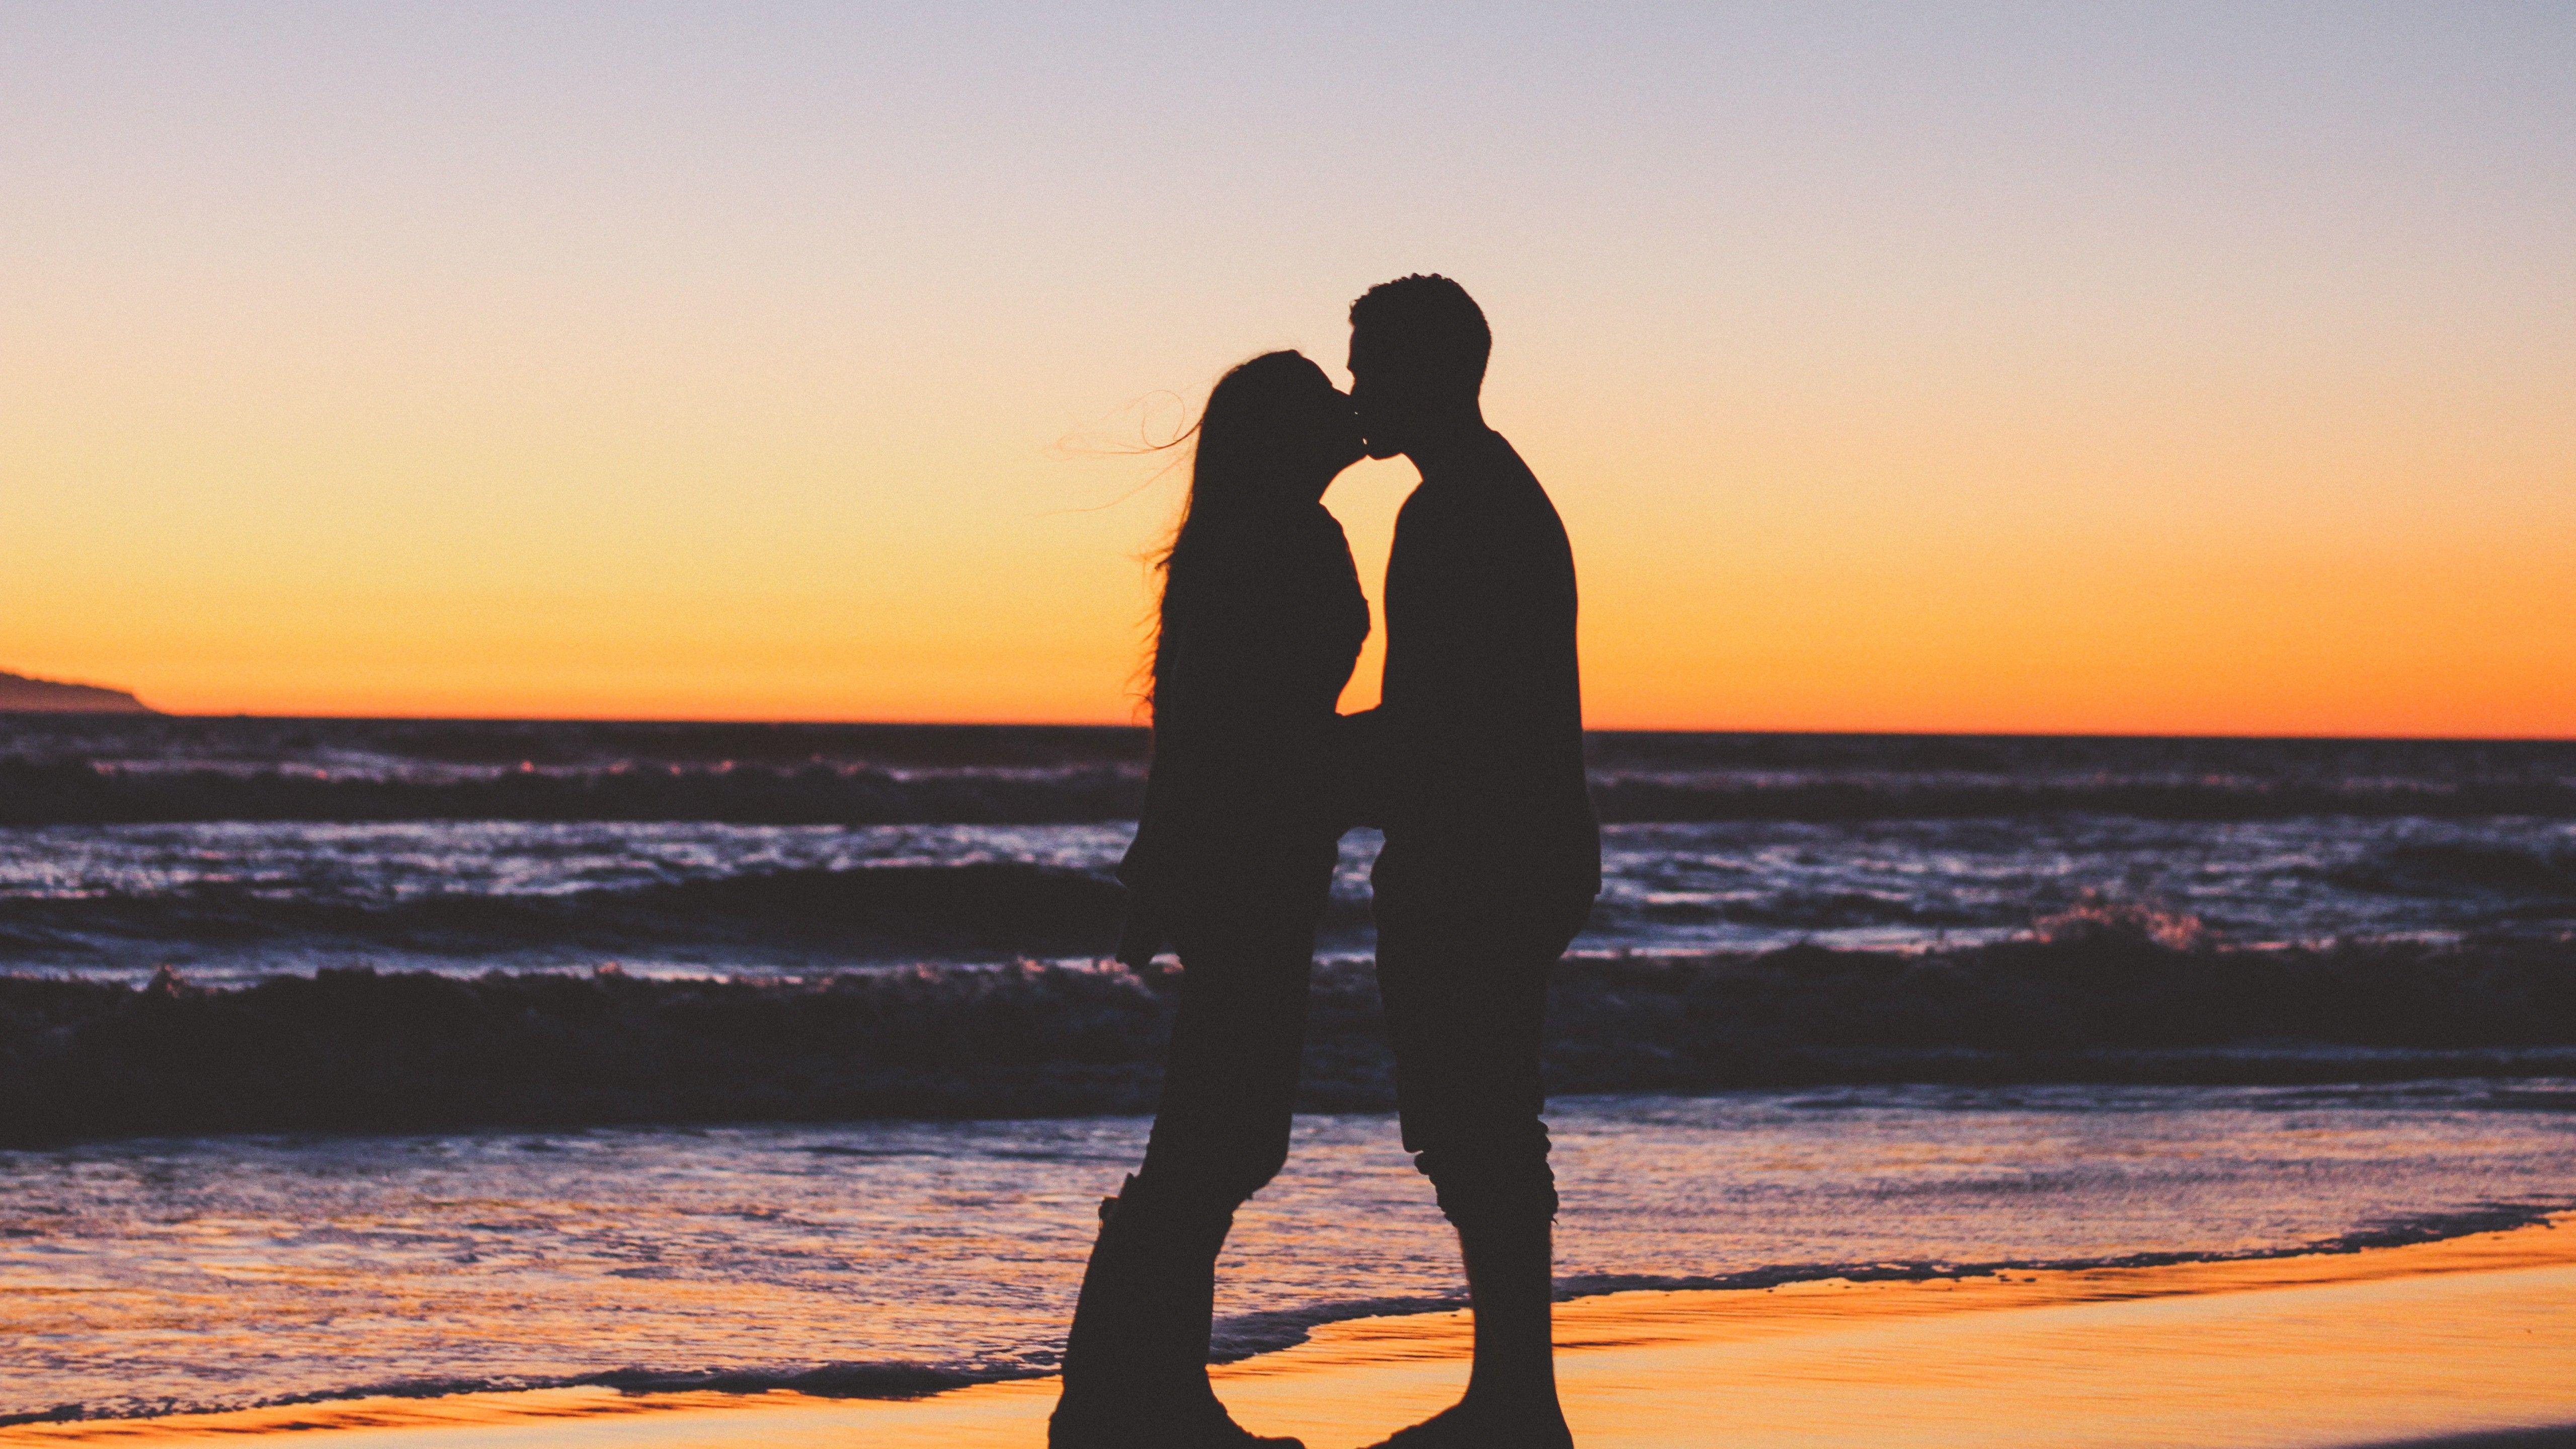 Girlfriend and Boyfriend Kiss at Sunset 5K Image